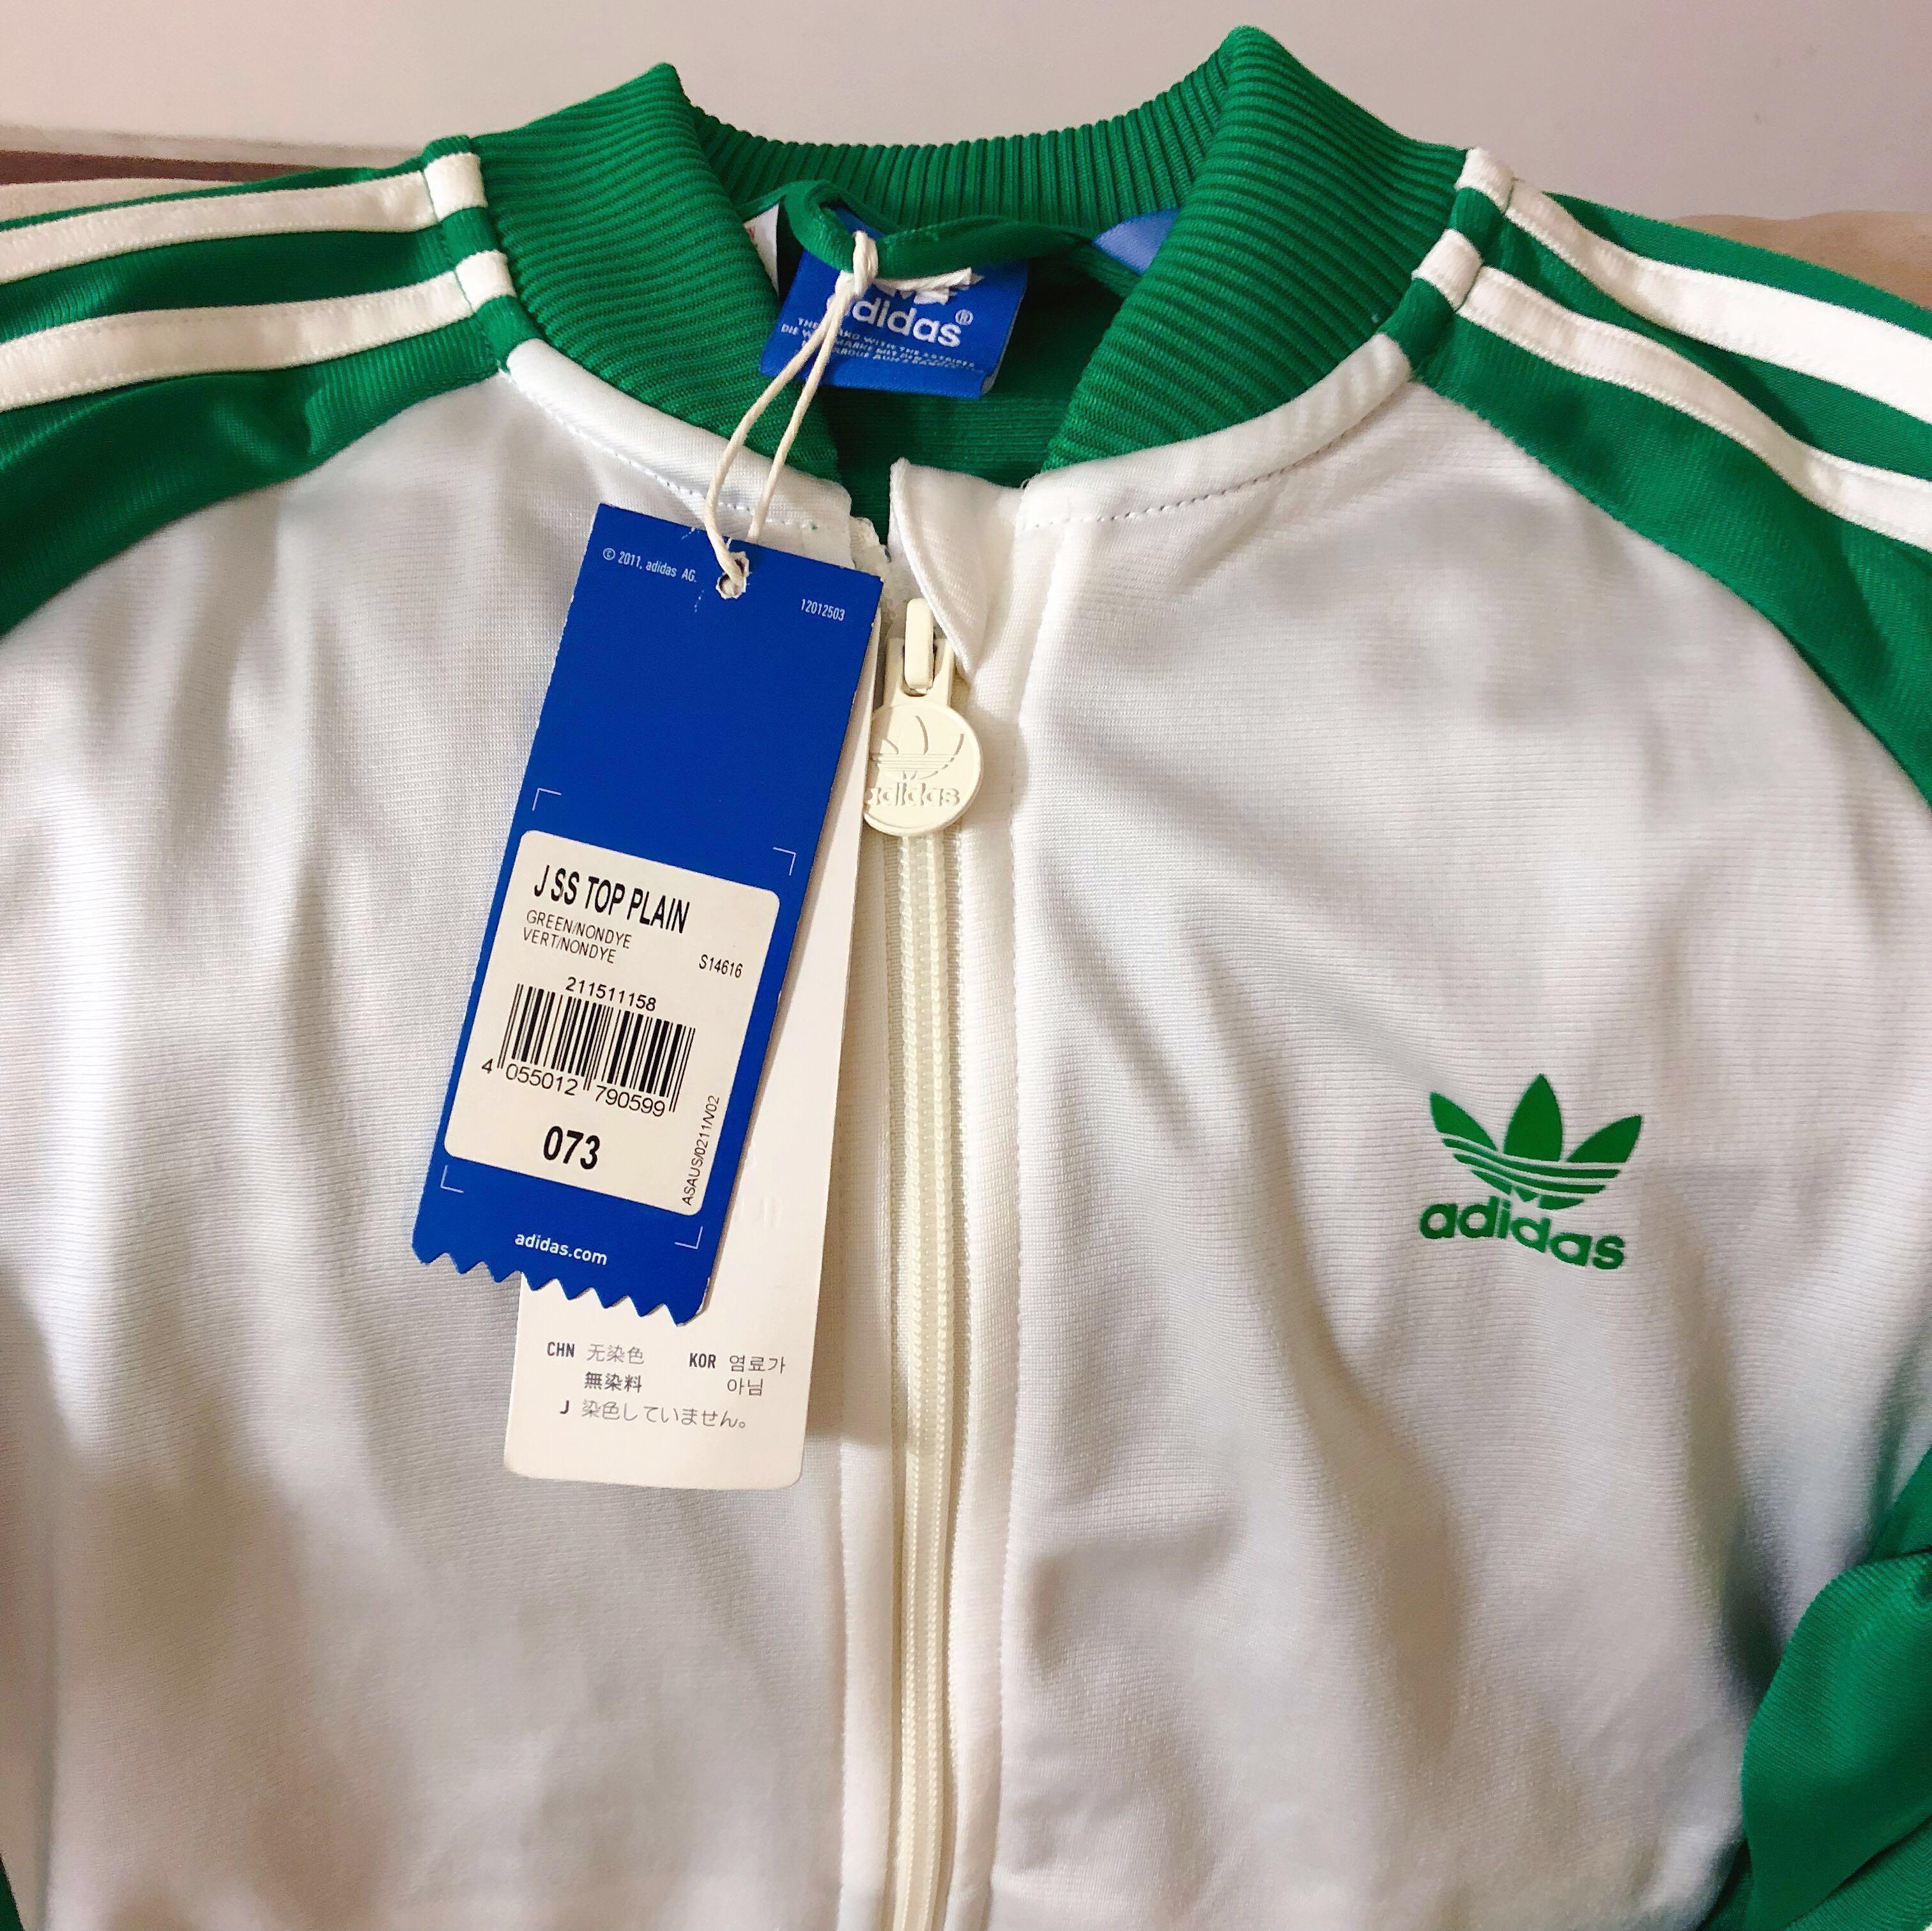 adidas green white jacket